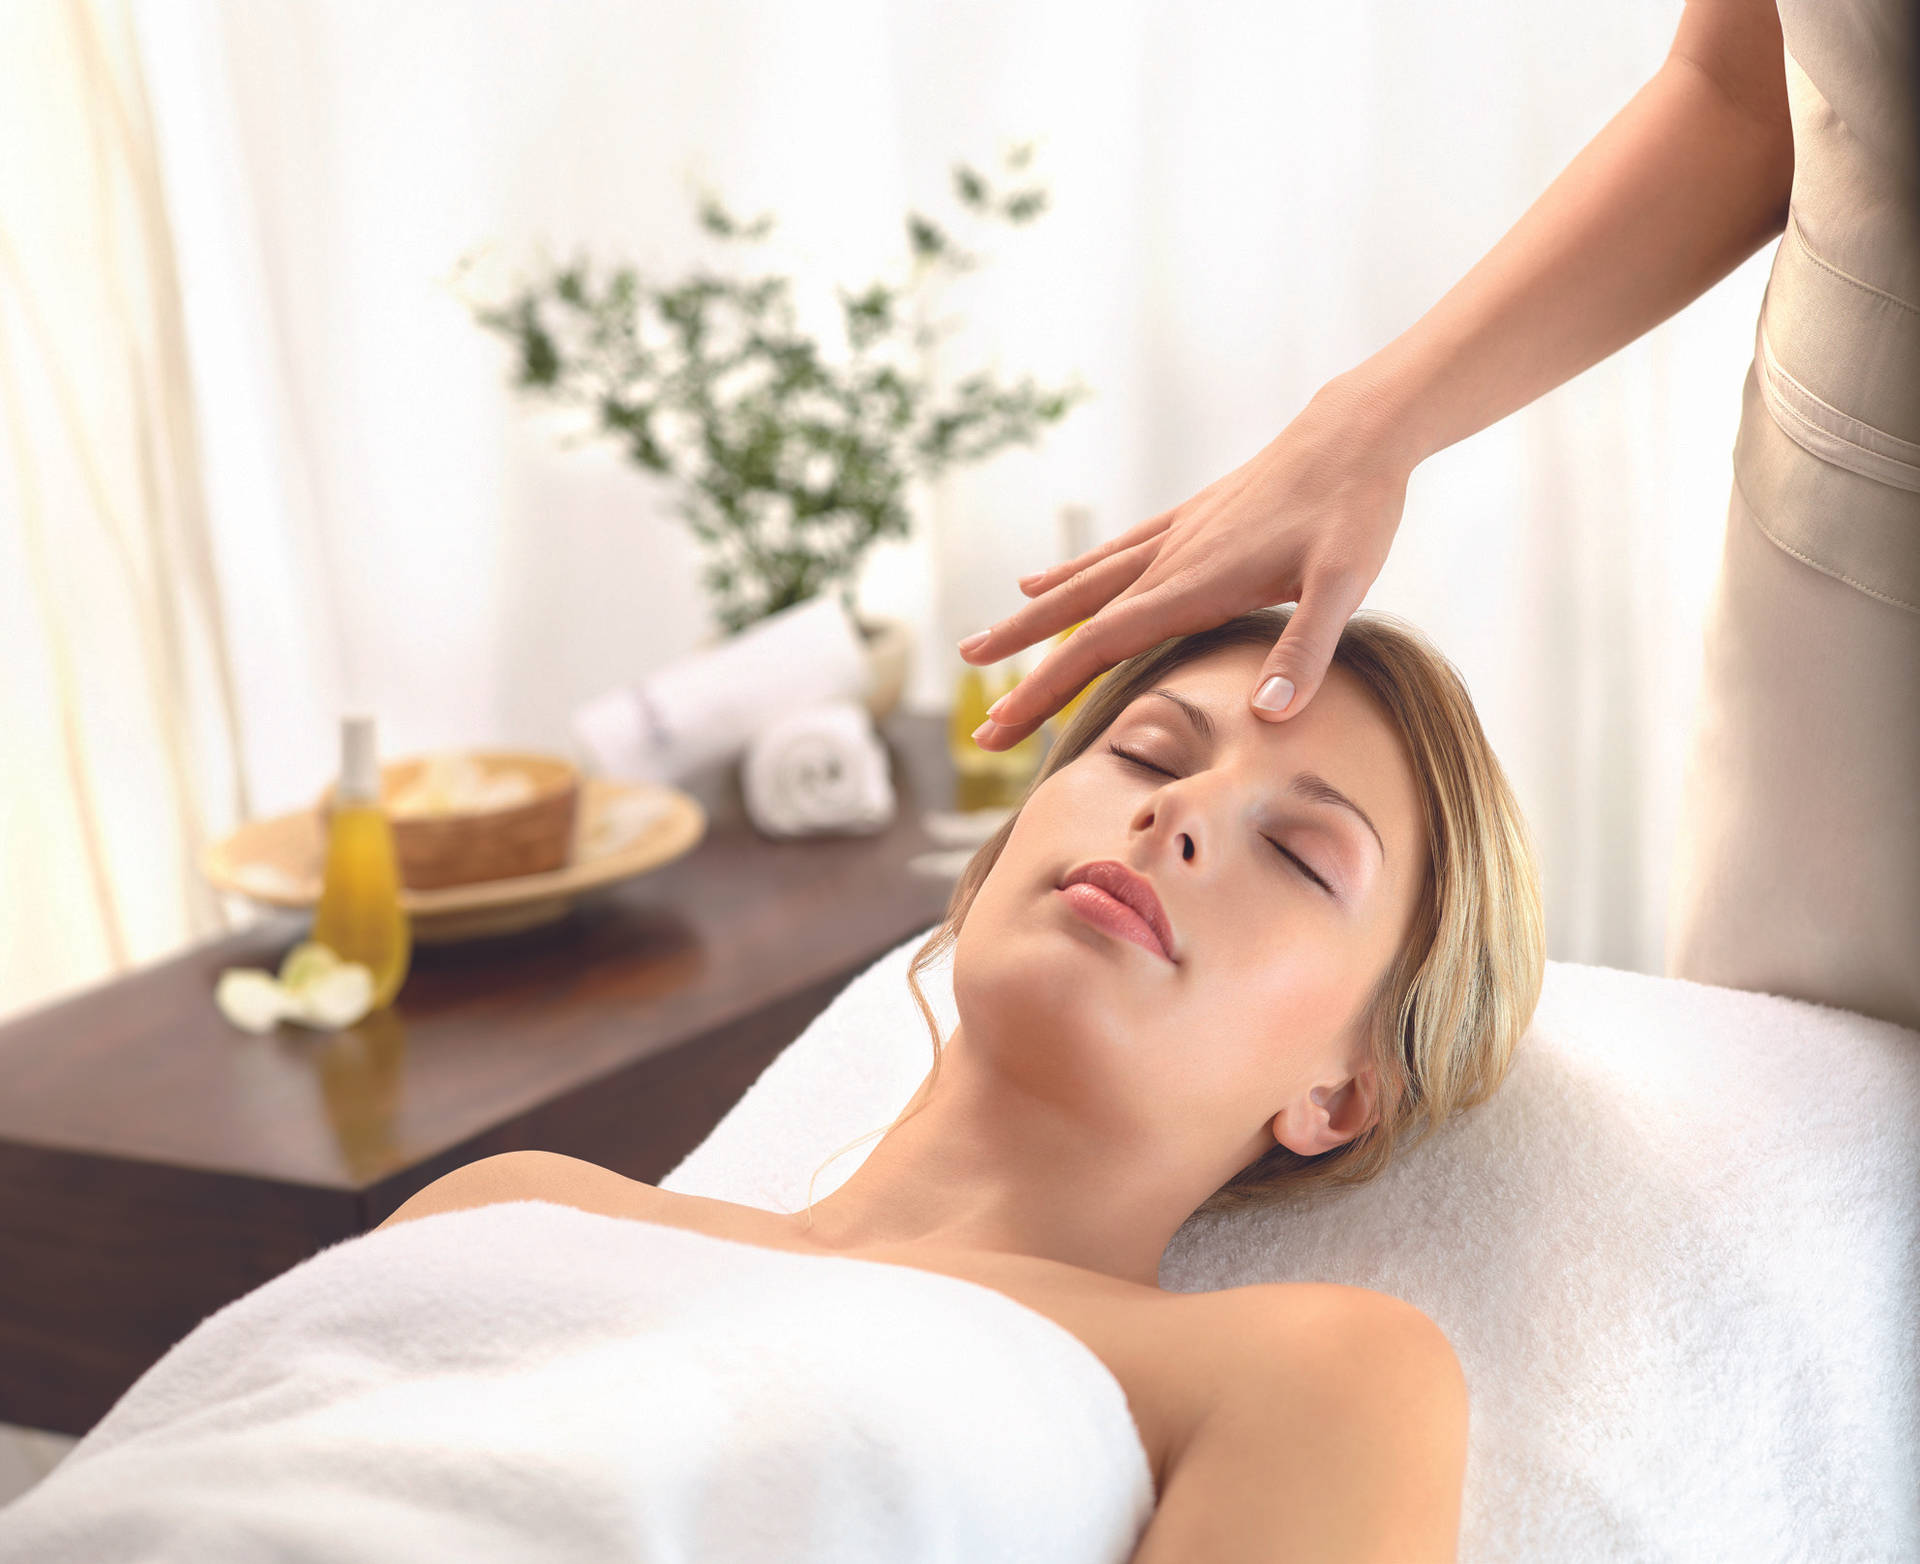 Massage In A Beauty Salon Background